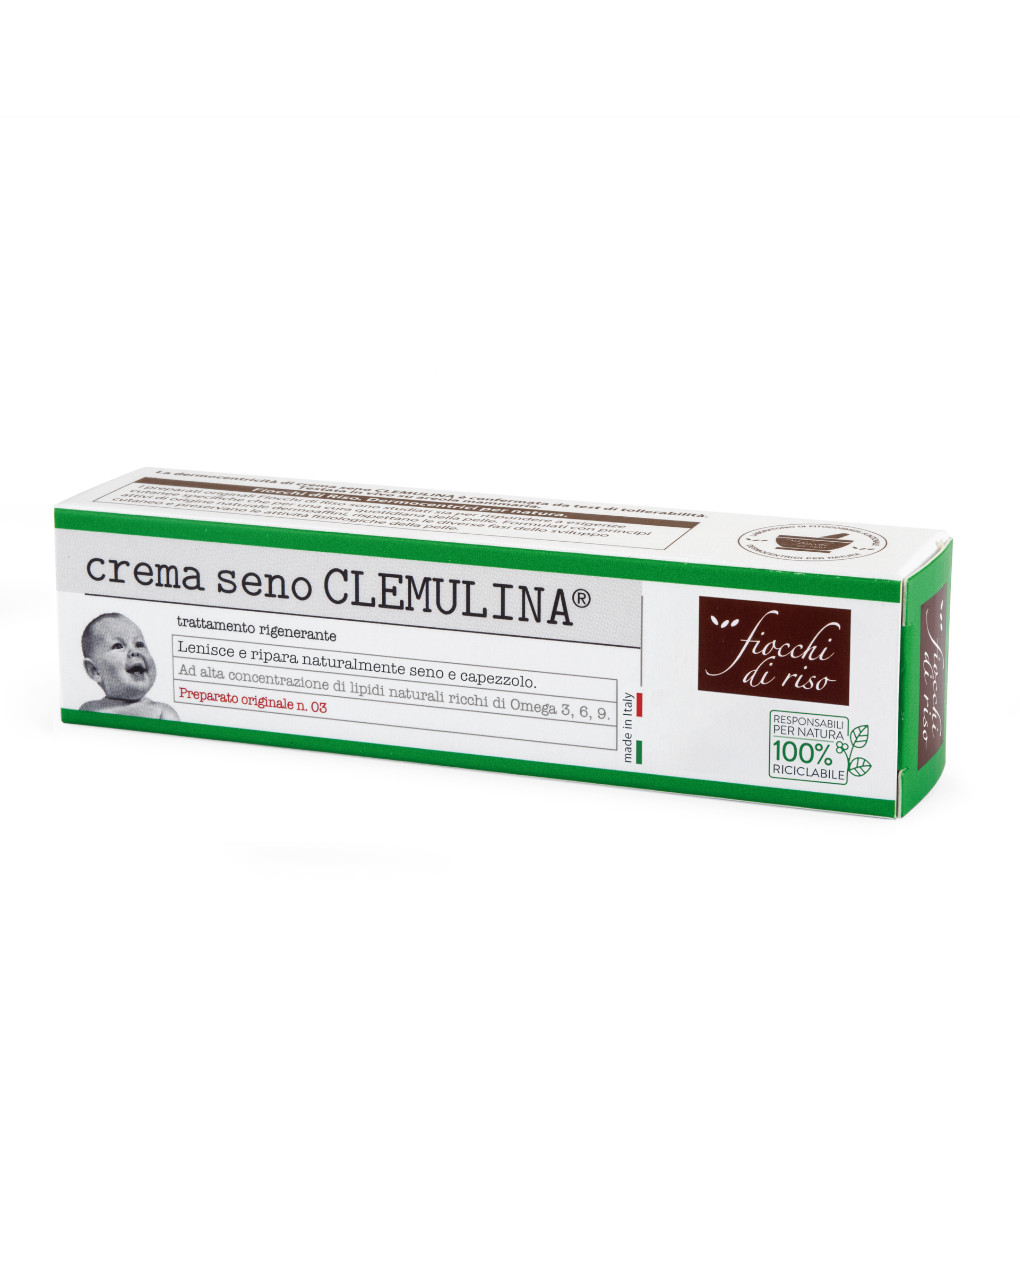 Crema Seno CLEMULINA® 15 ml